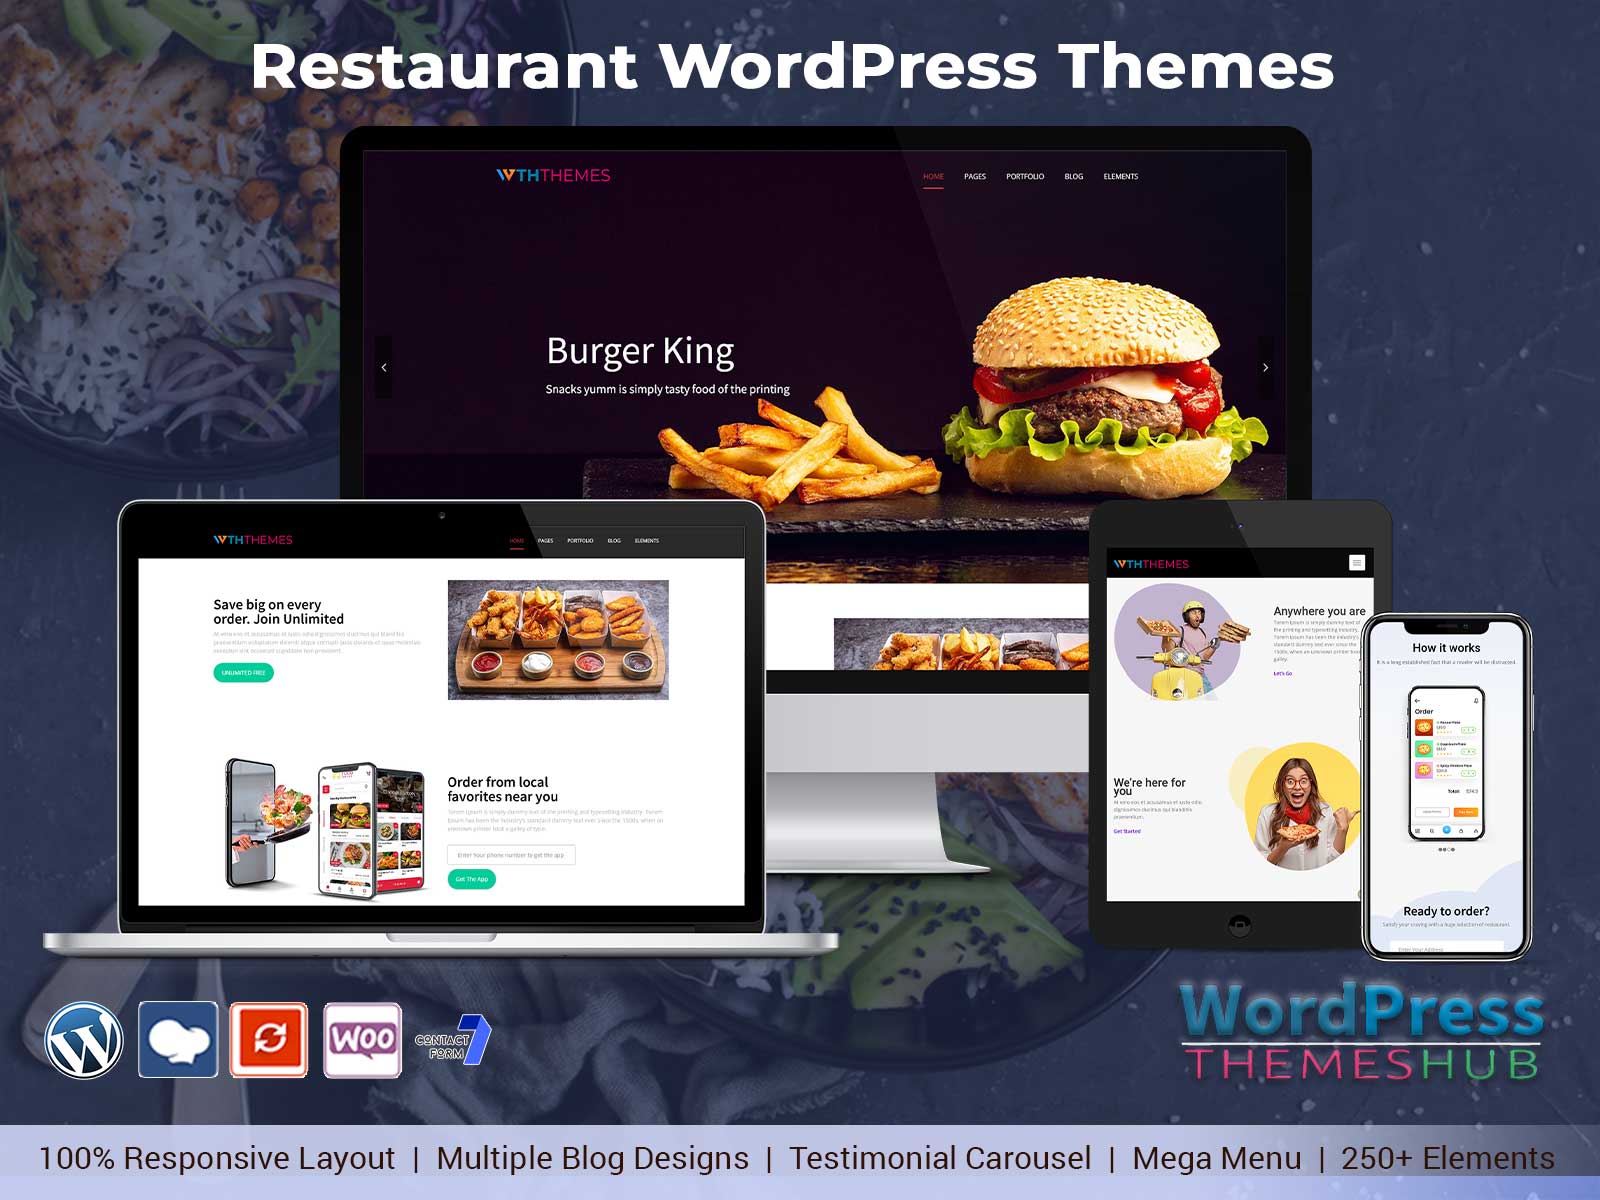 Restaurant WordPress Theme To Make Food Websites